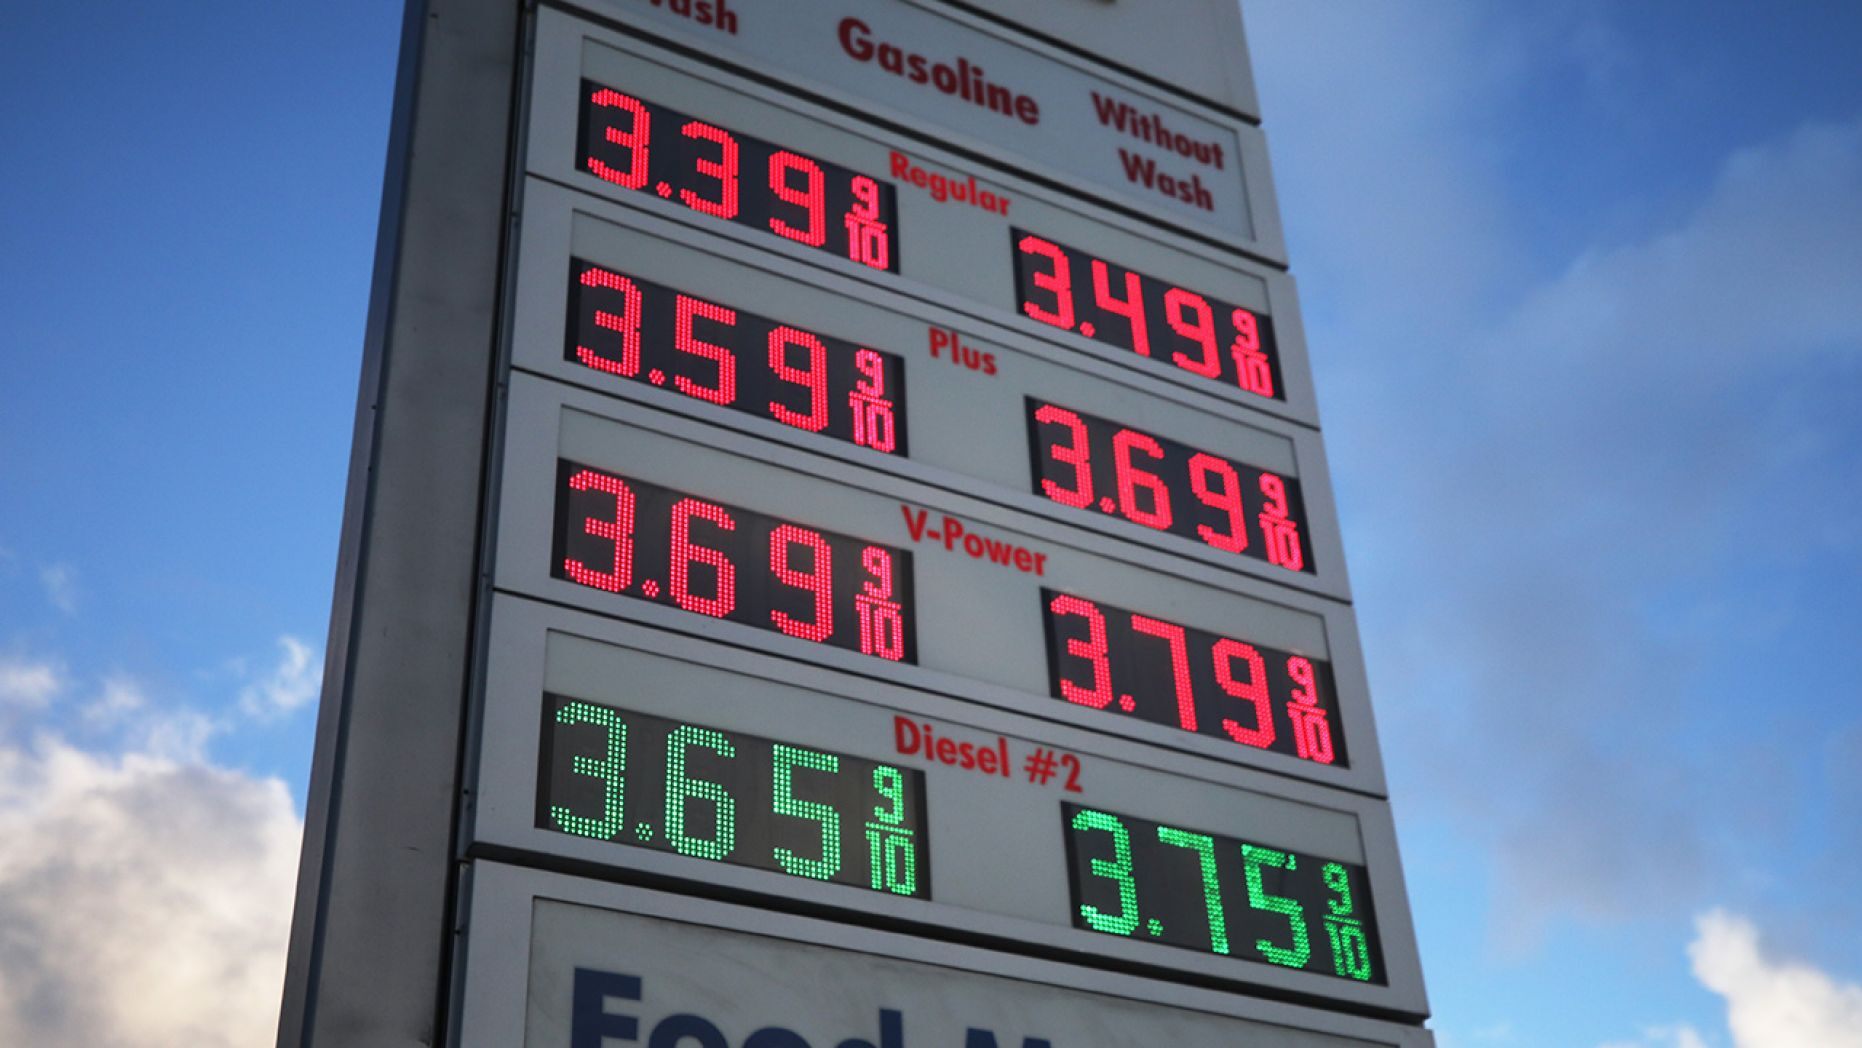 Бензин по английски. Галлон бензина в США. Стоимость бензина в Америке. Маки бензина в Америке. Ценник на бензин в США.